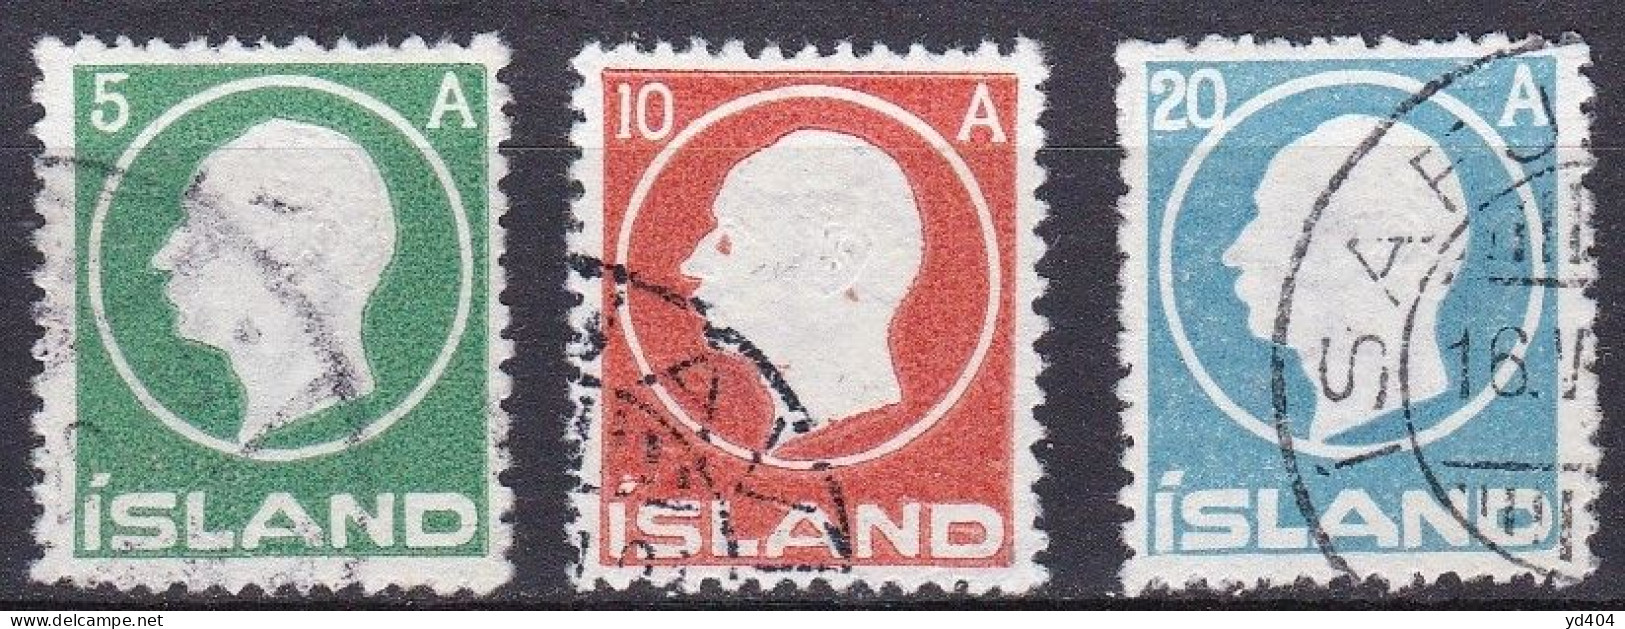 IS012F – ISLANDE – ICELAND – 1912 – KING FRDERIK VIII – SG # 102/4 USED 46 € - Usados